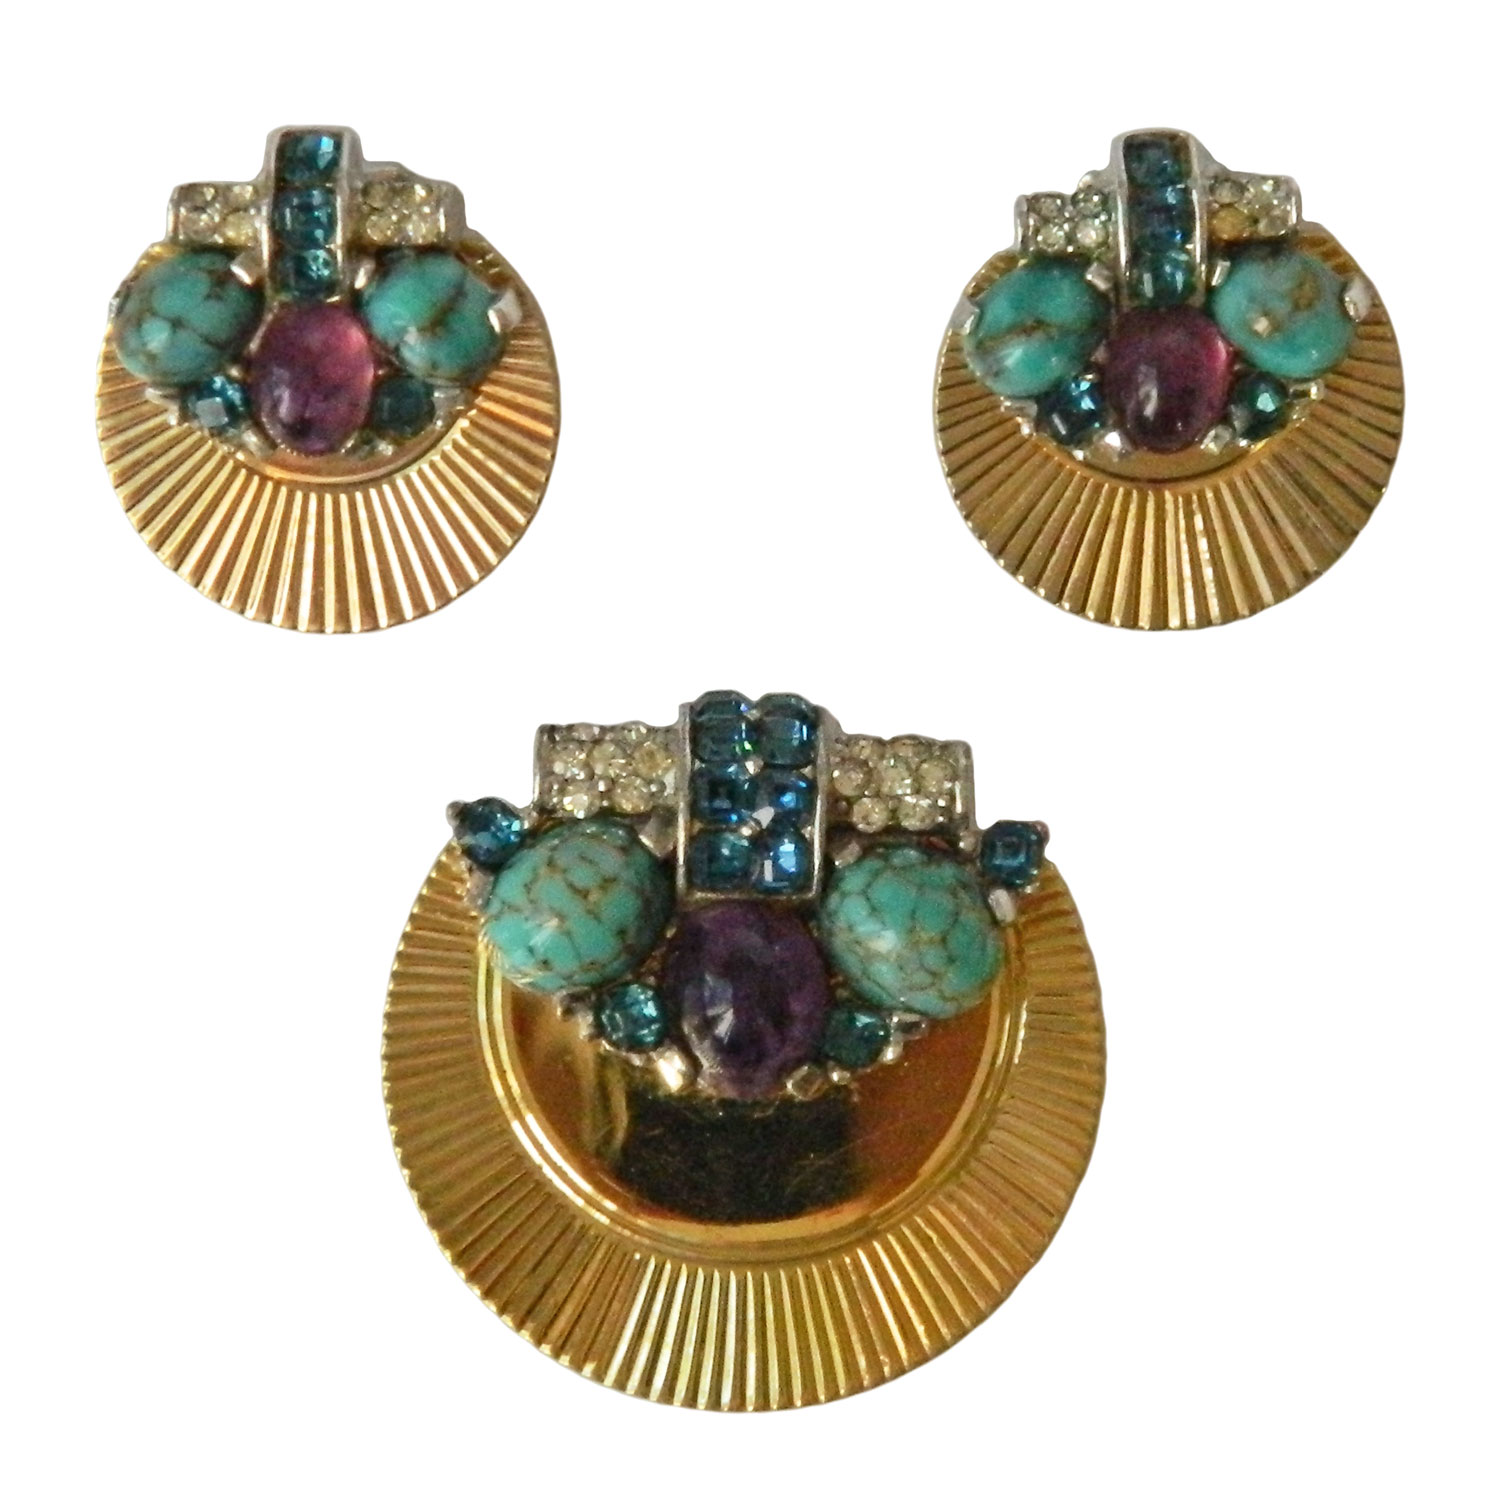 Marcel Boucher rhinestone brooch and earring set